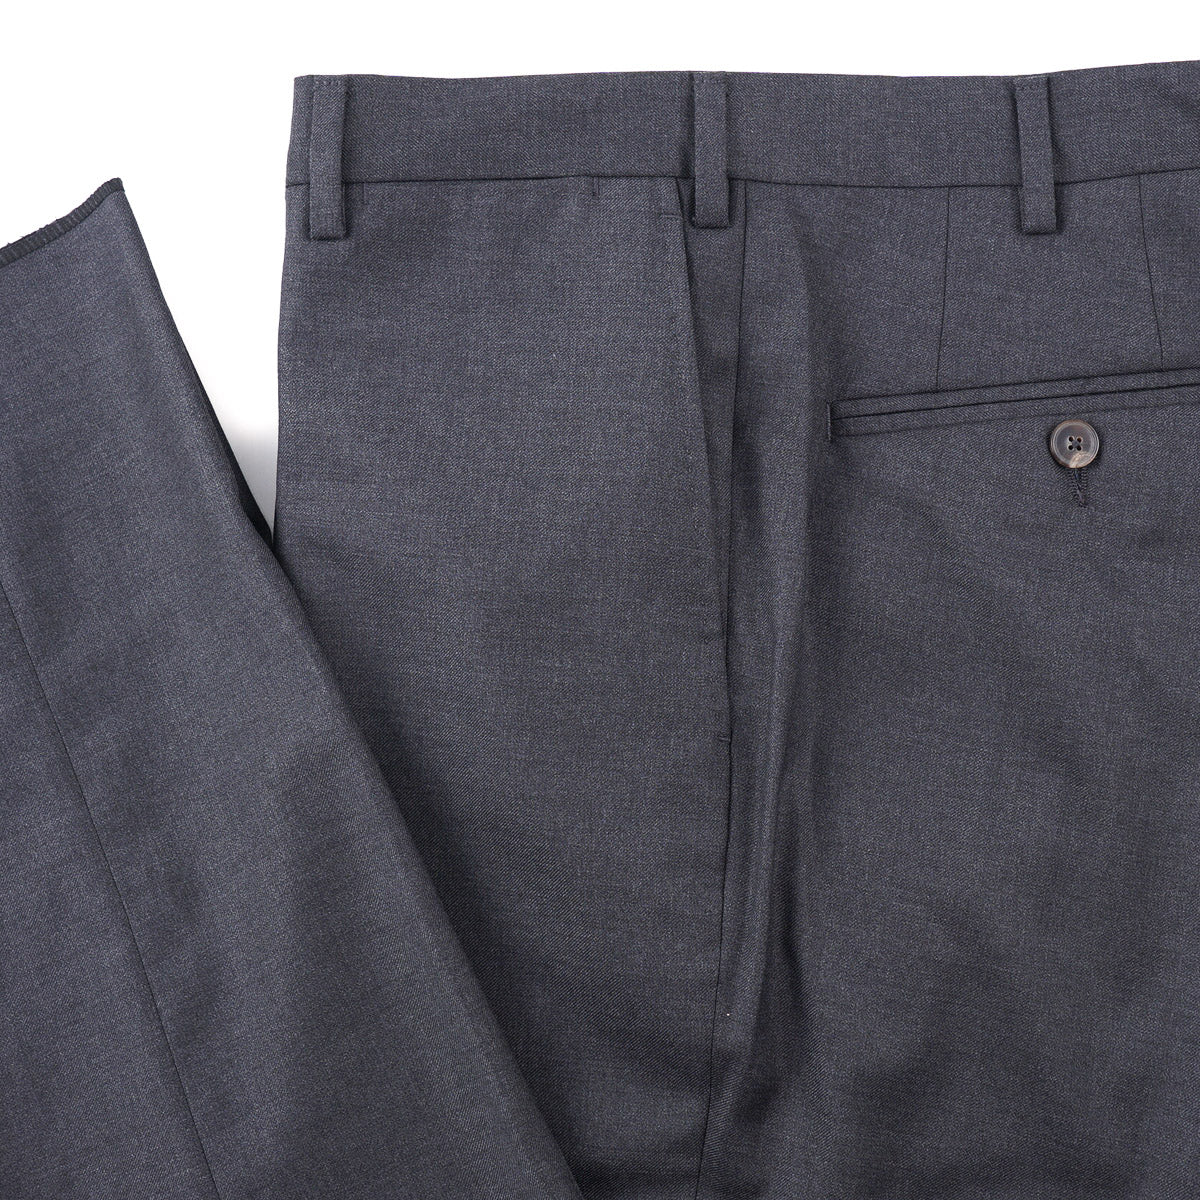 Marco Pescarolo Solid Charcoal Wool Pants - Top Shelf Apparel